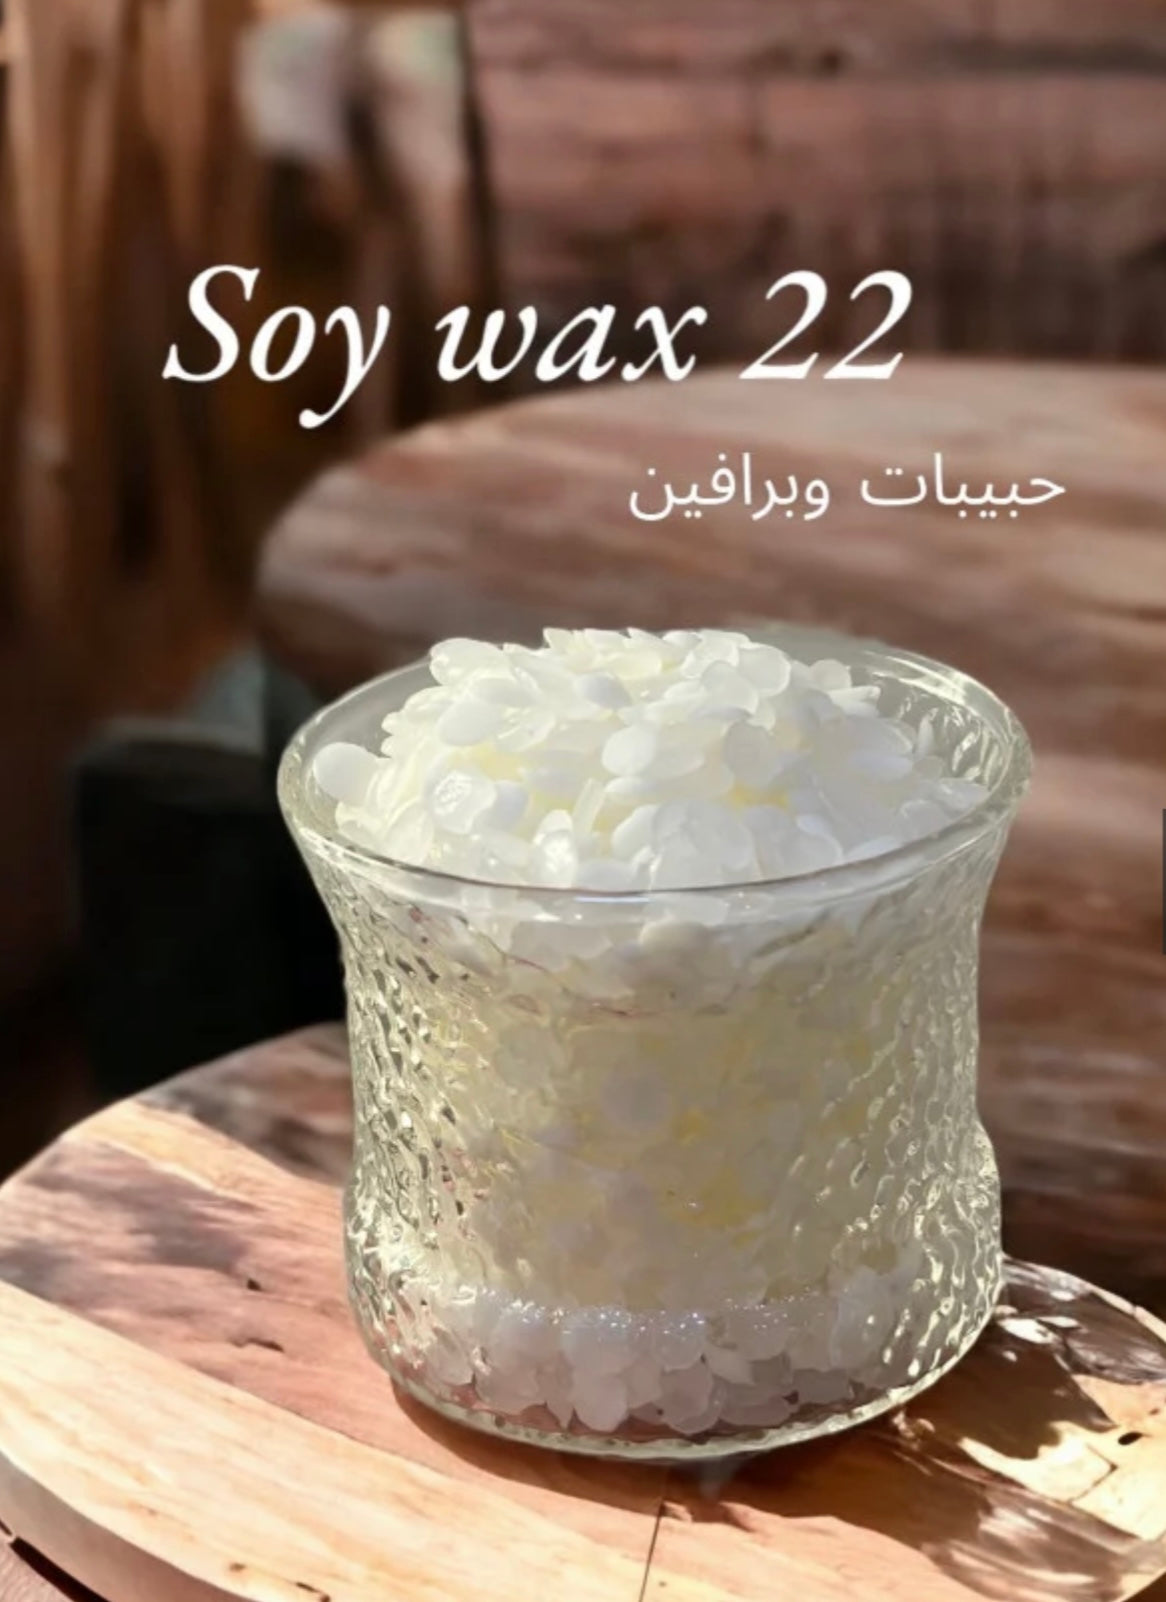 Soy wax (per kilo)